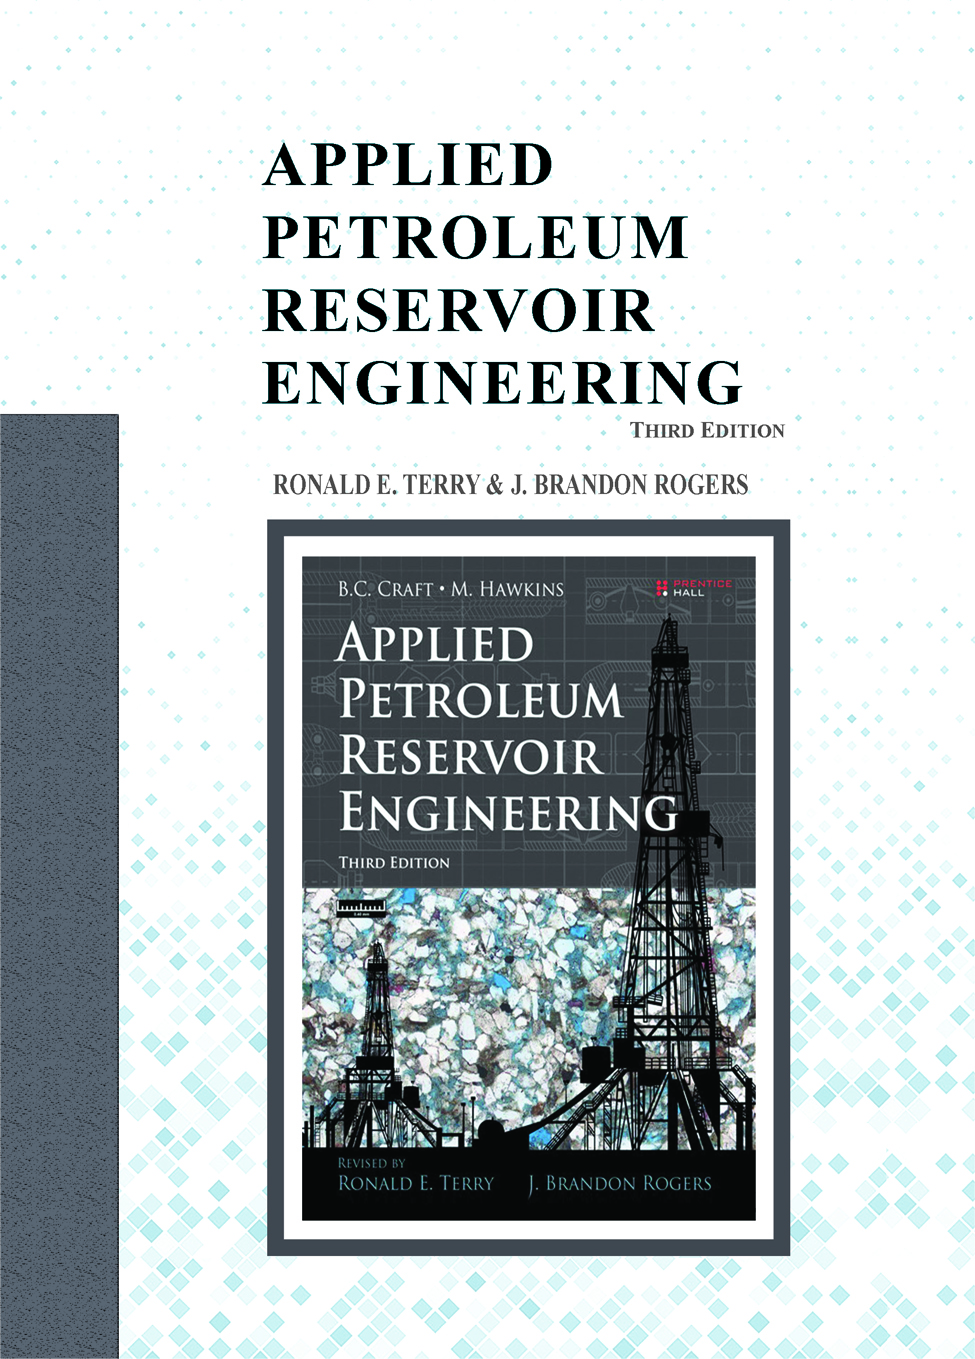 APPLIED PETROLEUM RESERVOIR ENGINEERING - CRAFT & HAWKINS - Third Edition